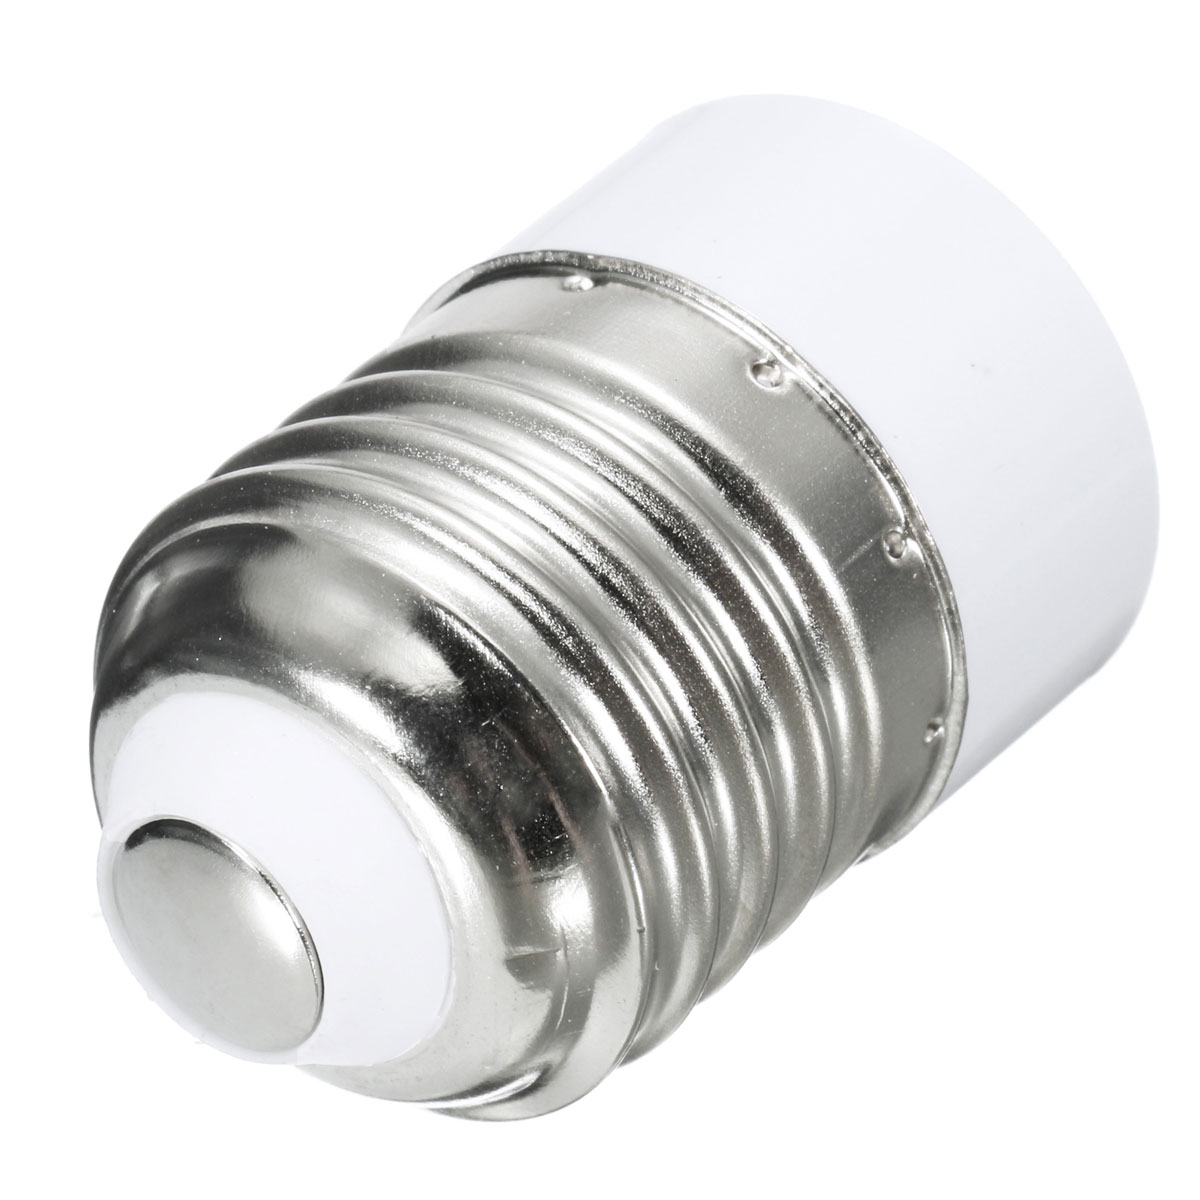 E27-to-E14-Base-LED-Light-Lamp-Bulb-Adapter-Adaptor-Converter-Screw-Socket-Fit-1645726-4